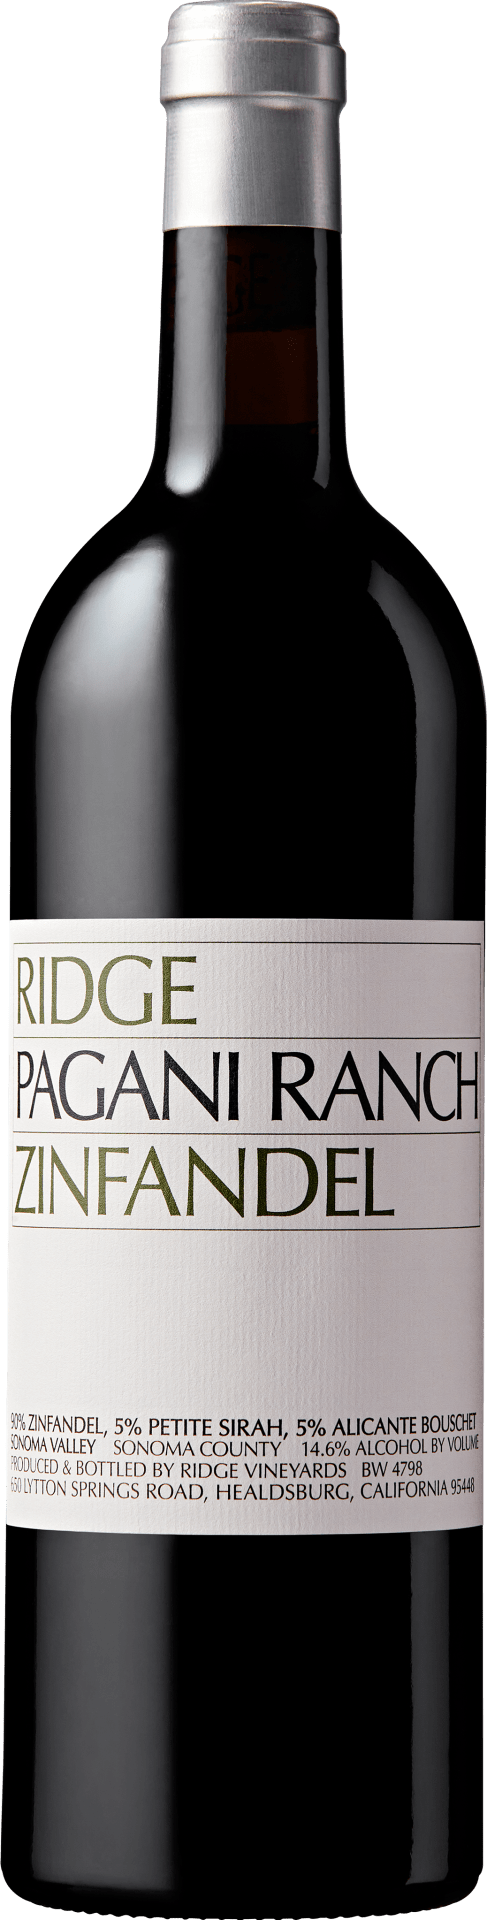 Ridge Pagani Ranch